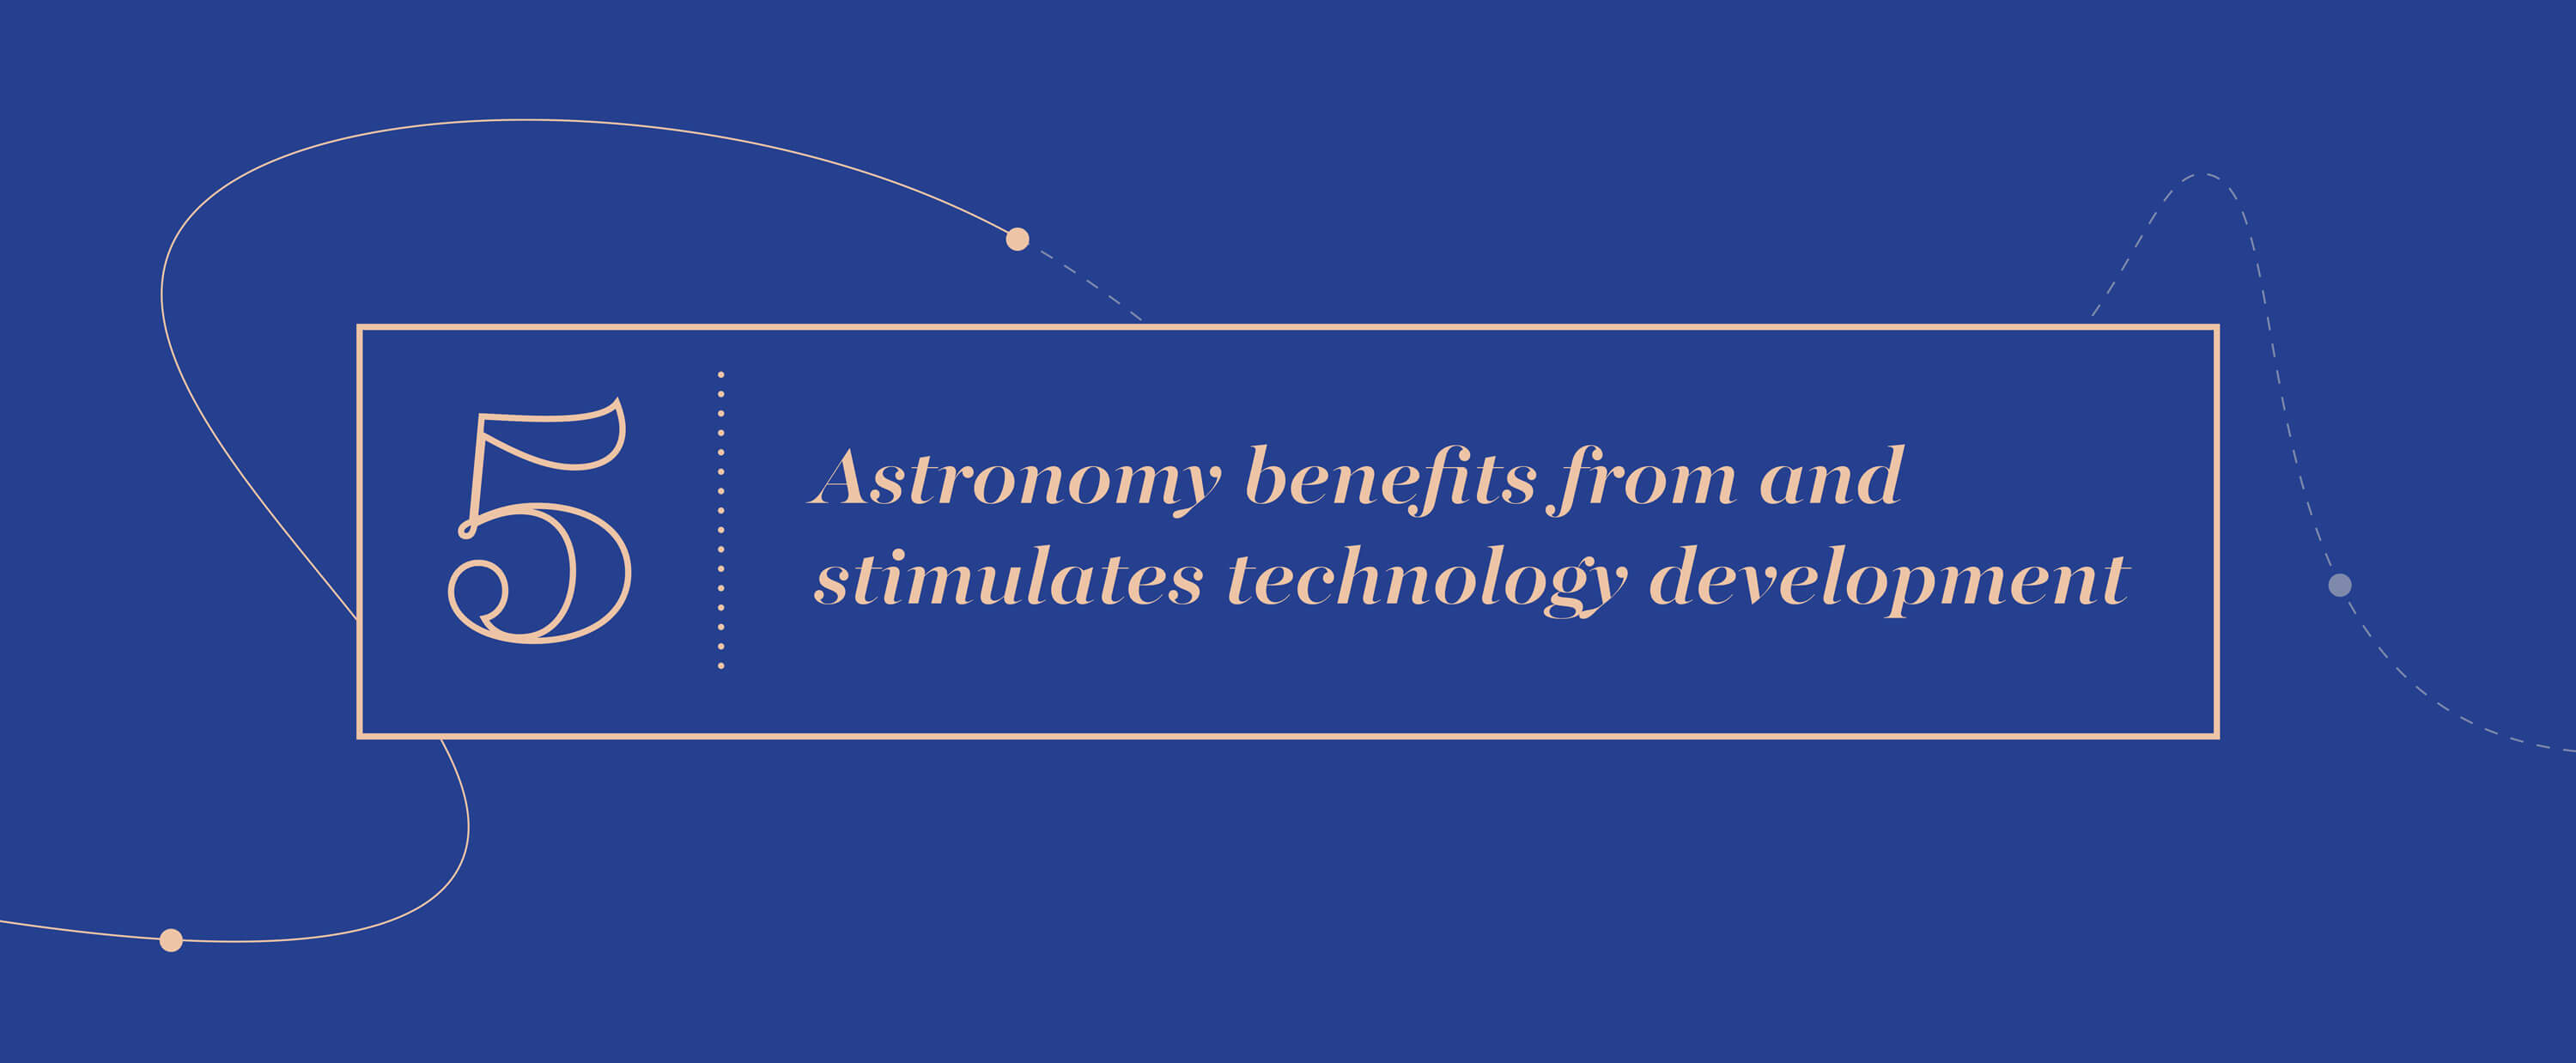 Big Idea 5 - Astronomy benefits from and stimulates technology development